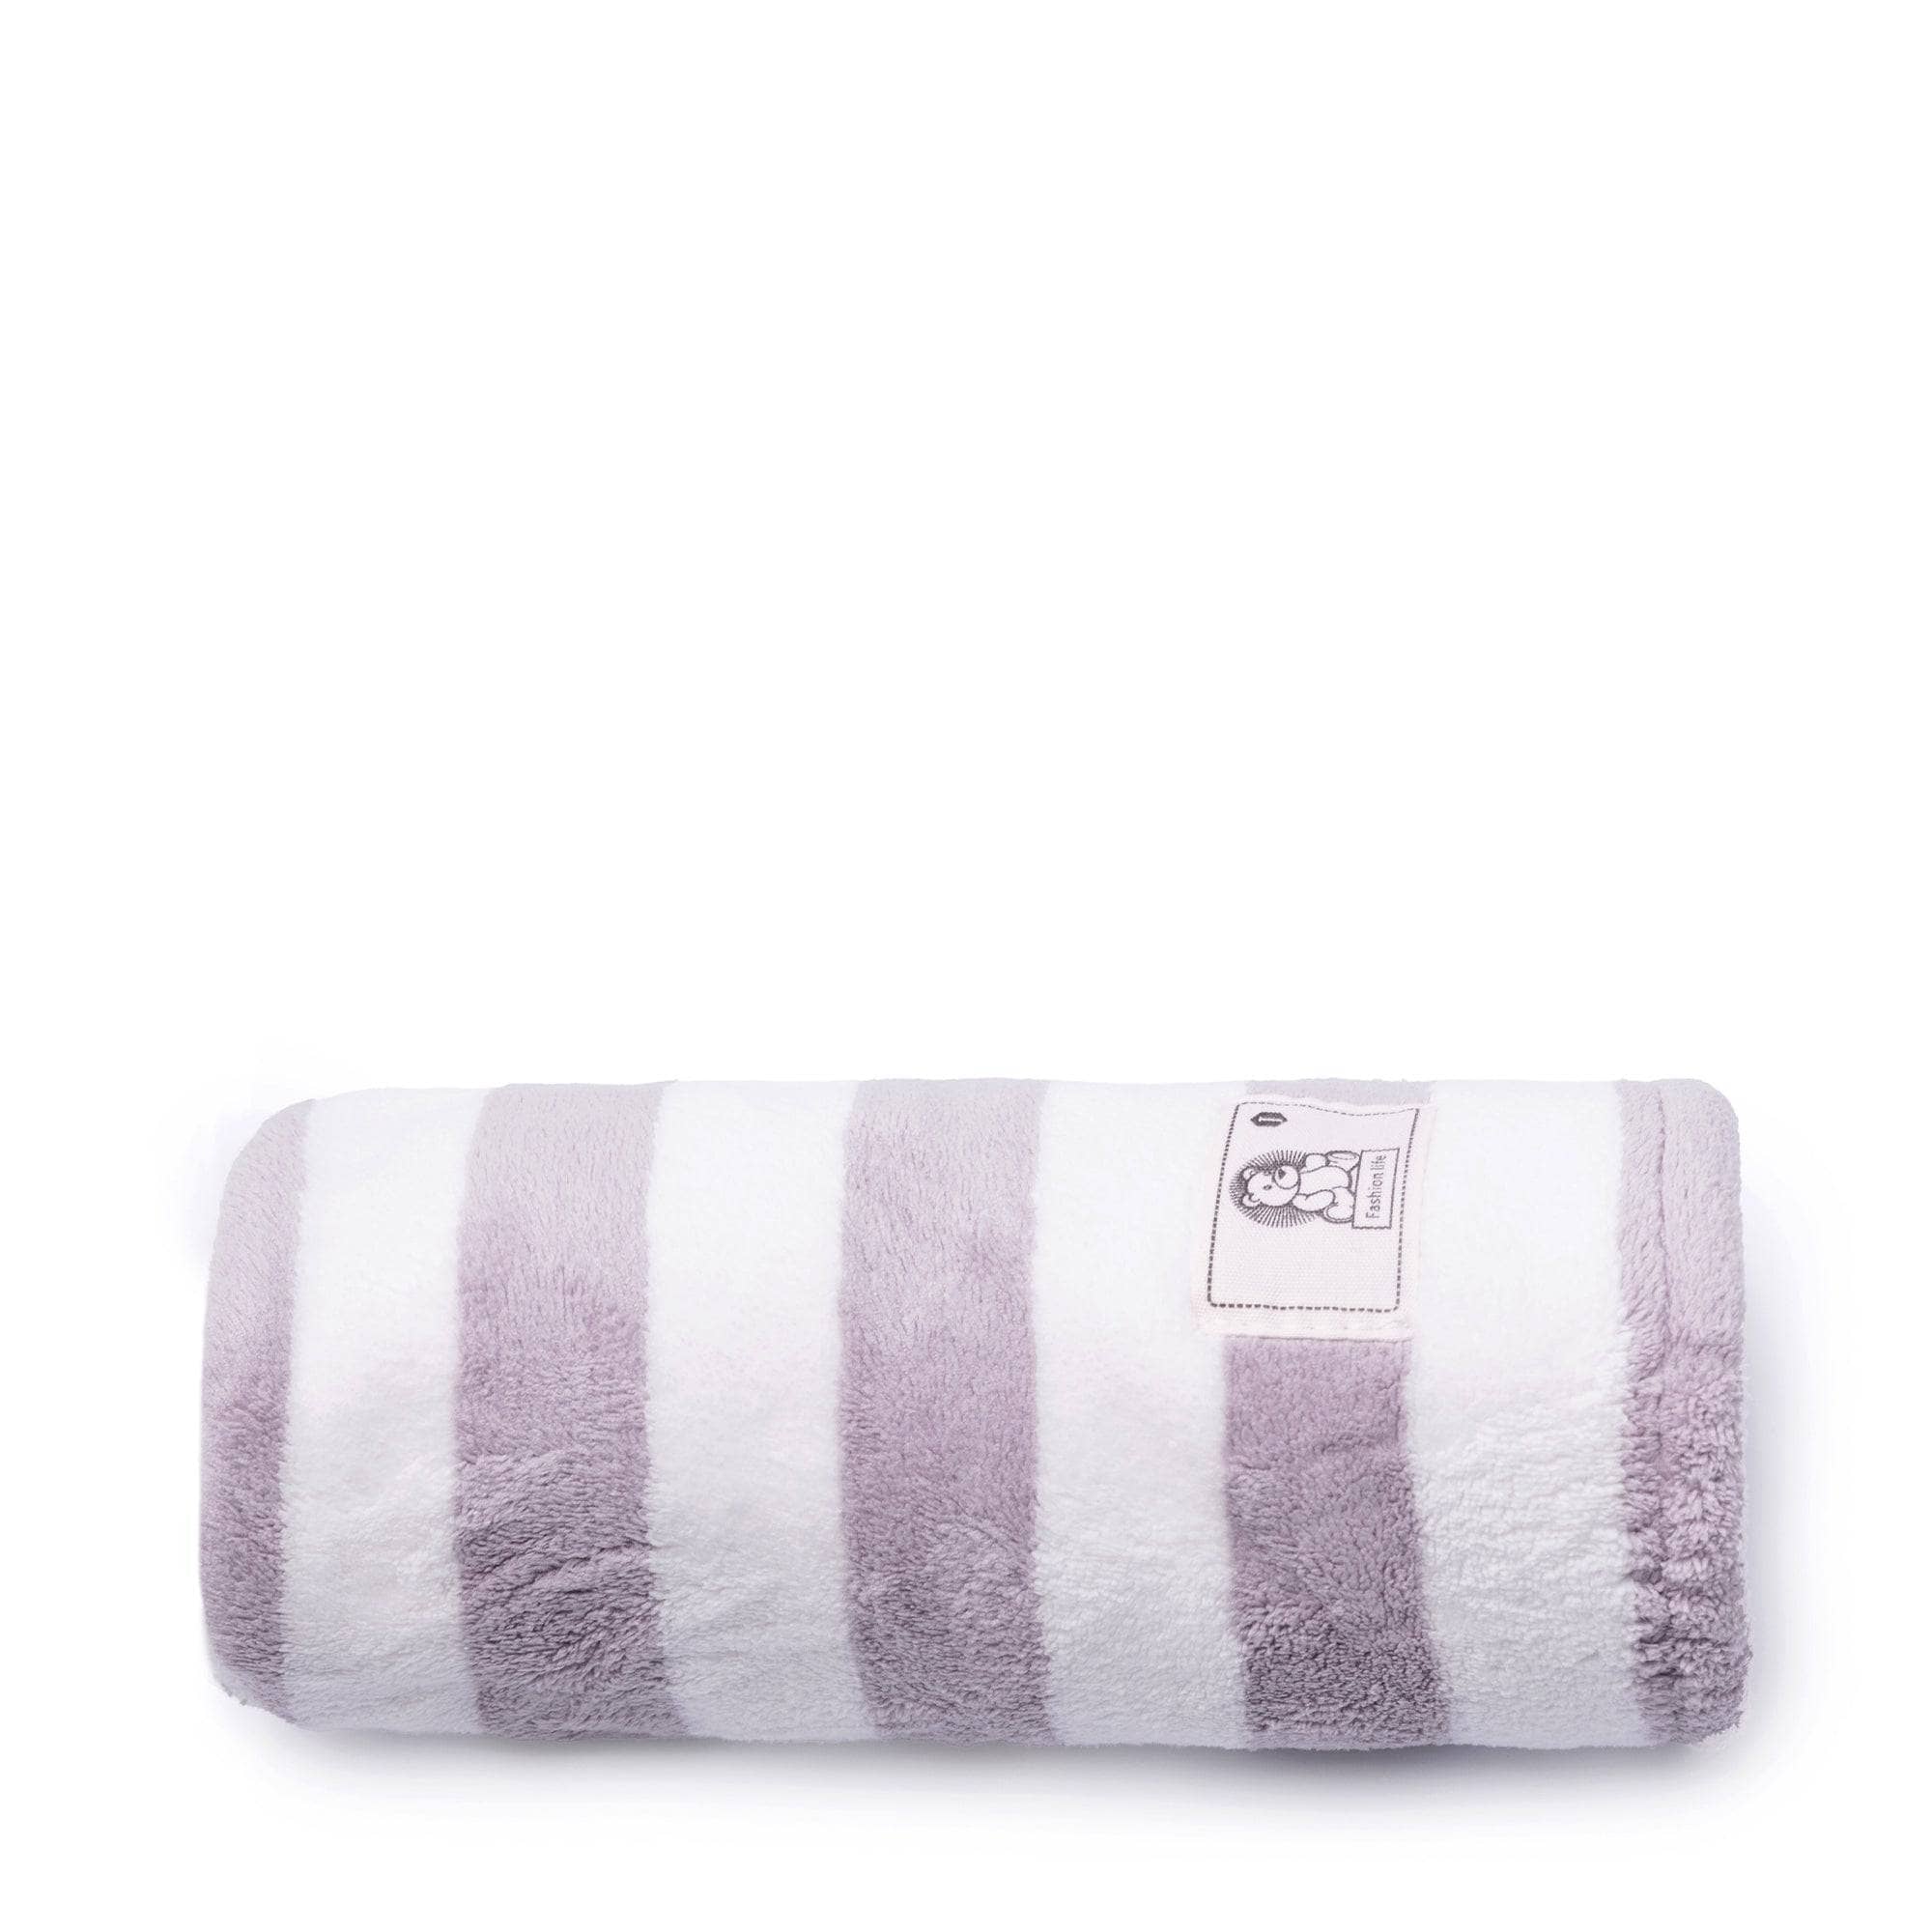  - Fast Drying Hair Towel Wrap - Original UGG Australia Classic